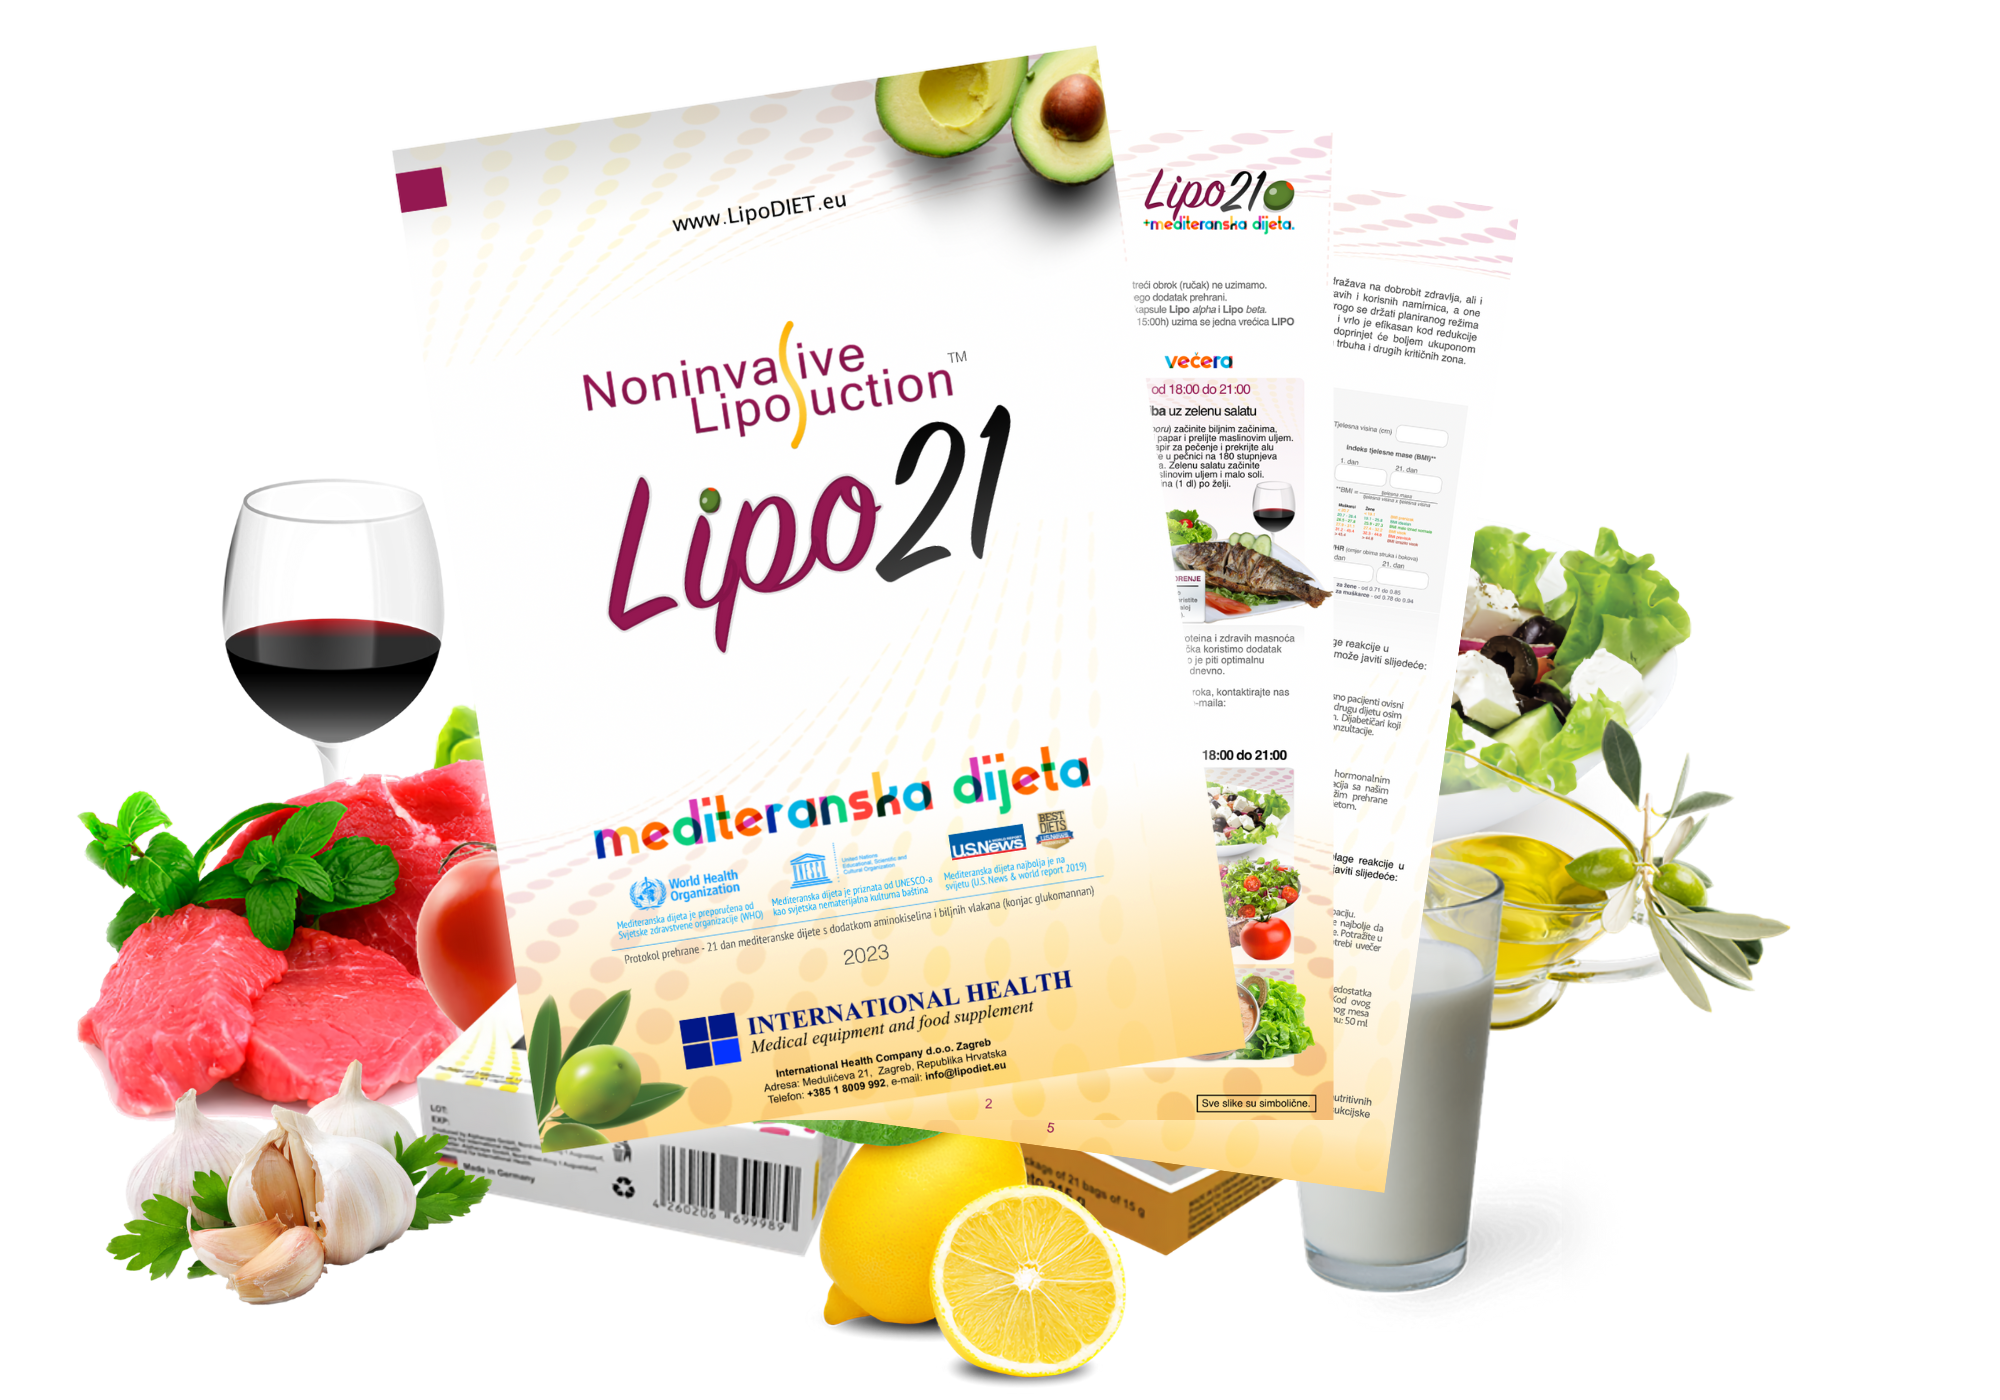 Lipo21 tretma LIGHT 21-dnevni dietni program 1 kos (neinvazivna liposukcijska)